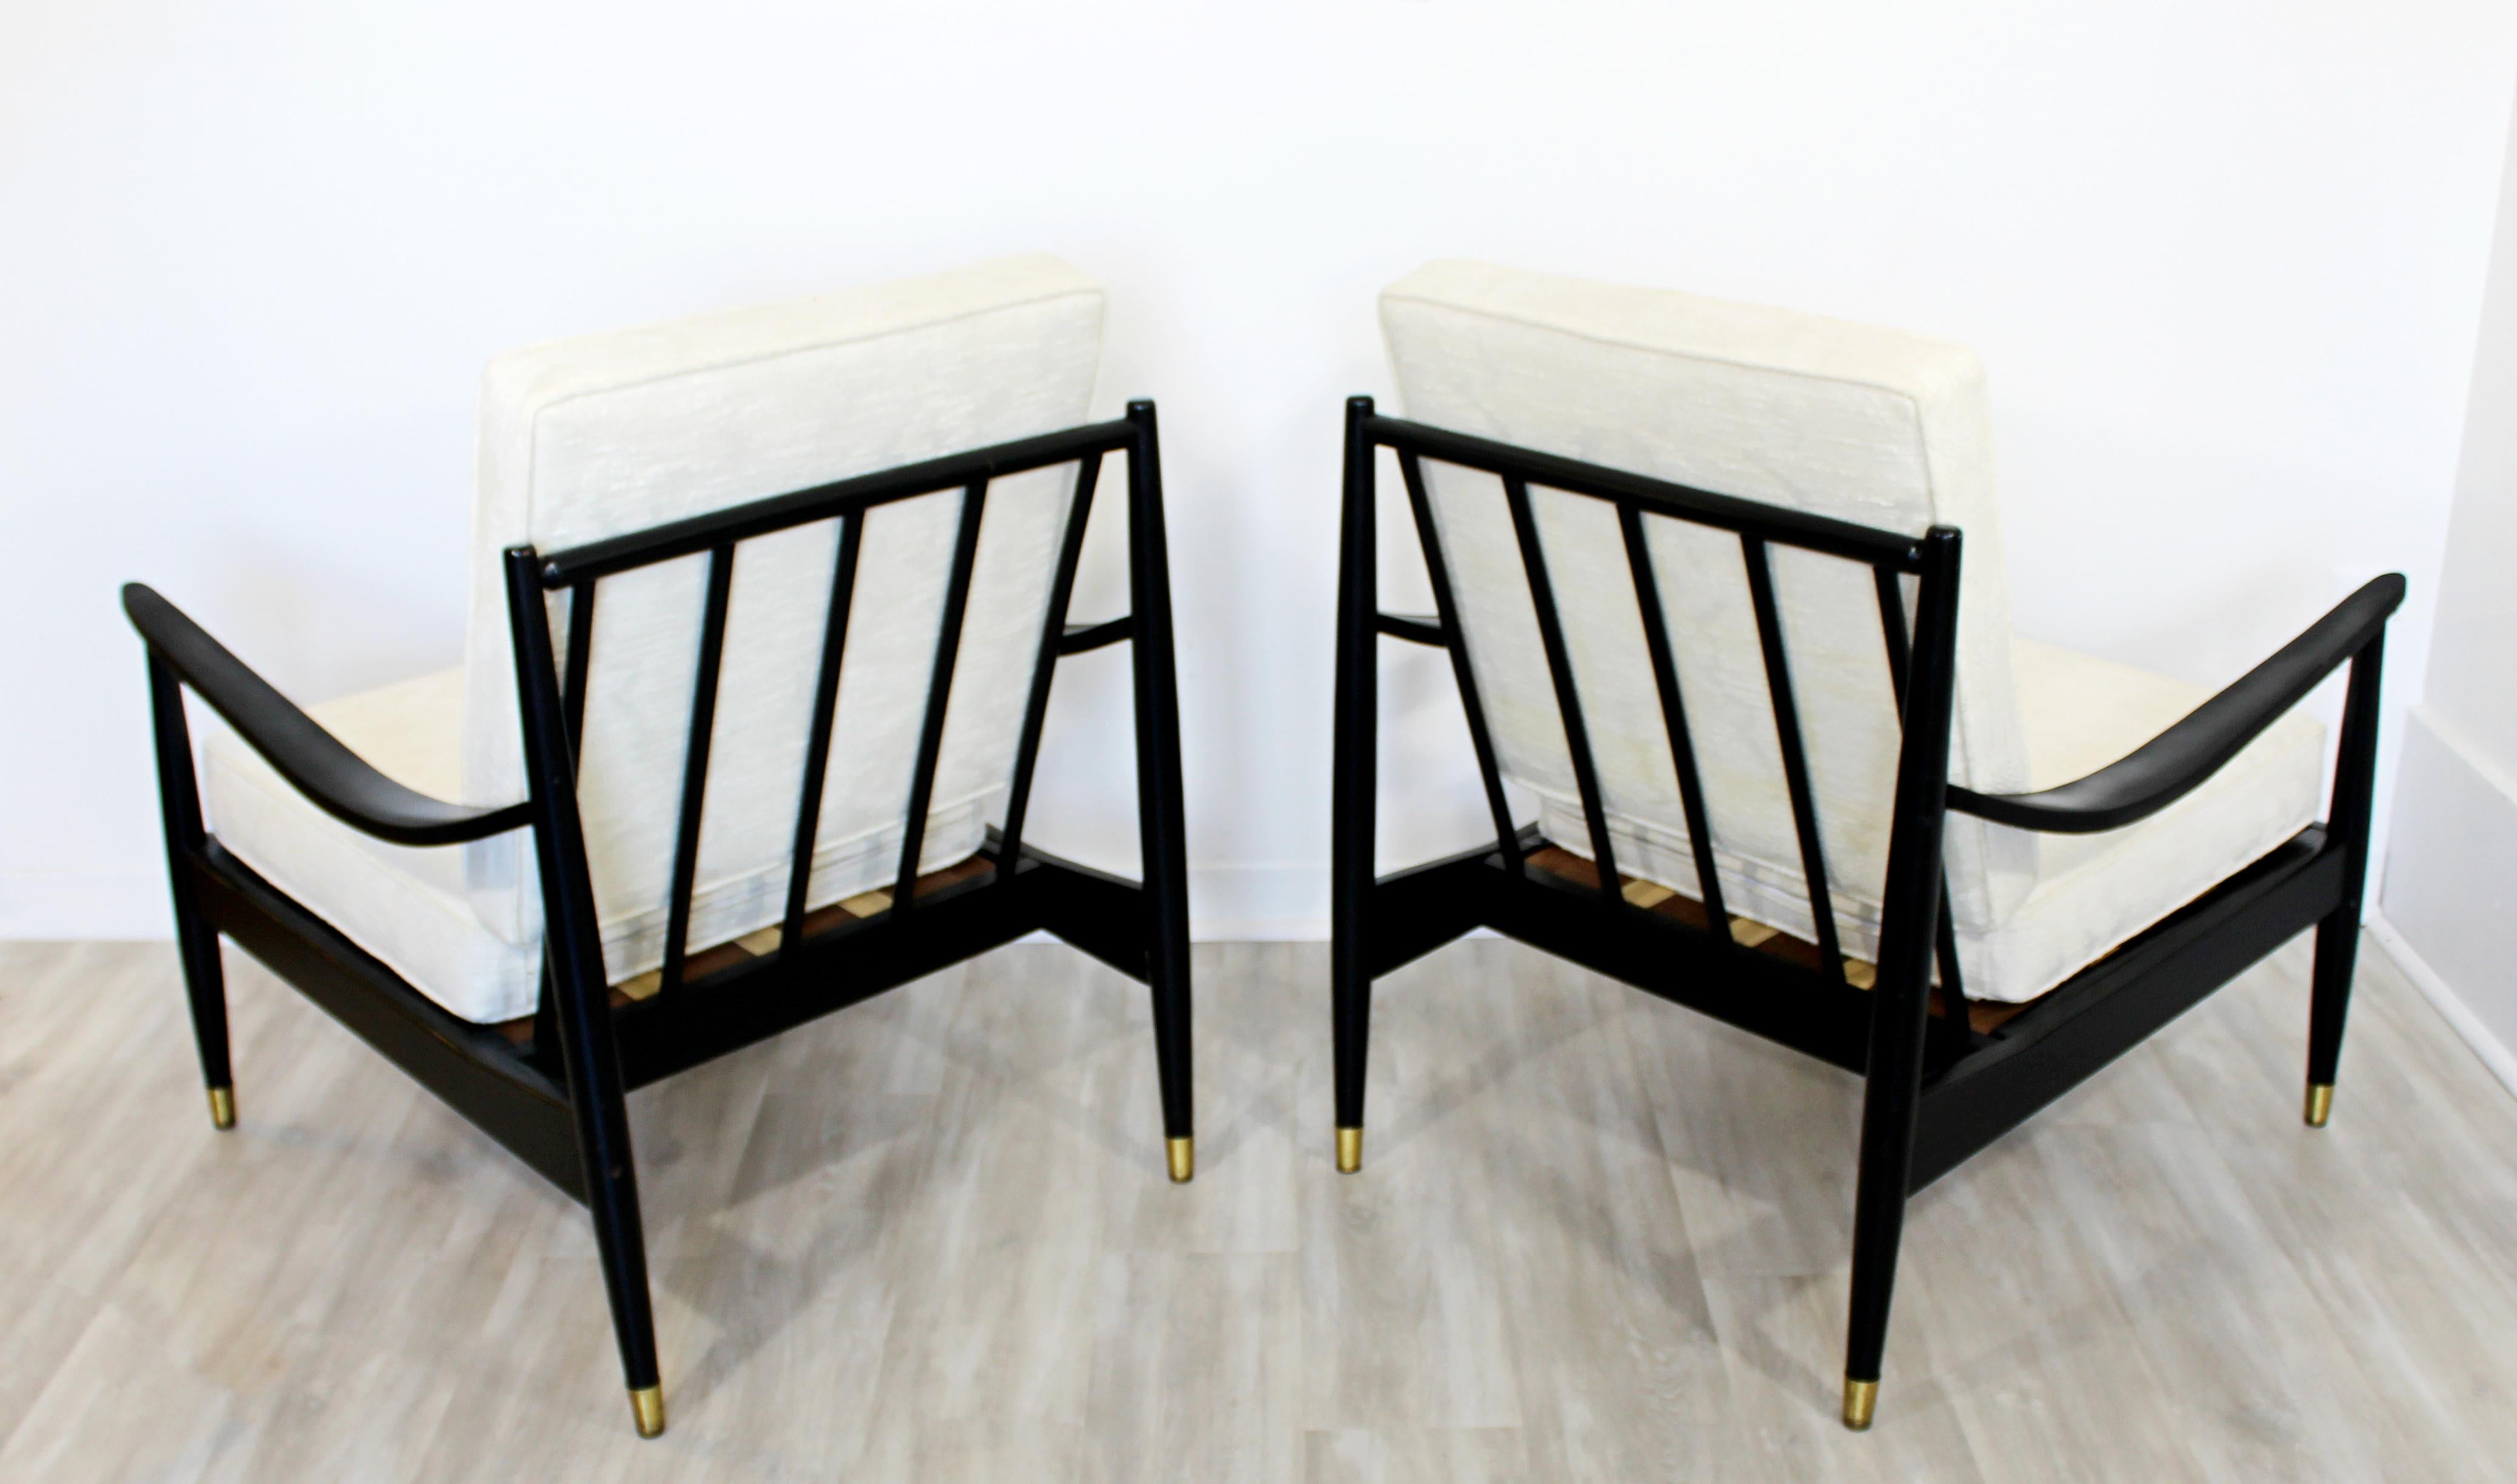 Upholstery Mid-Century Modern Wythe Craft Pair of Armchairs & Ottoman 1950s Danish Style